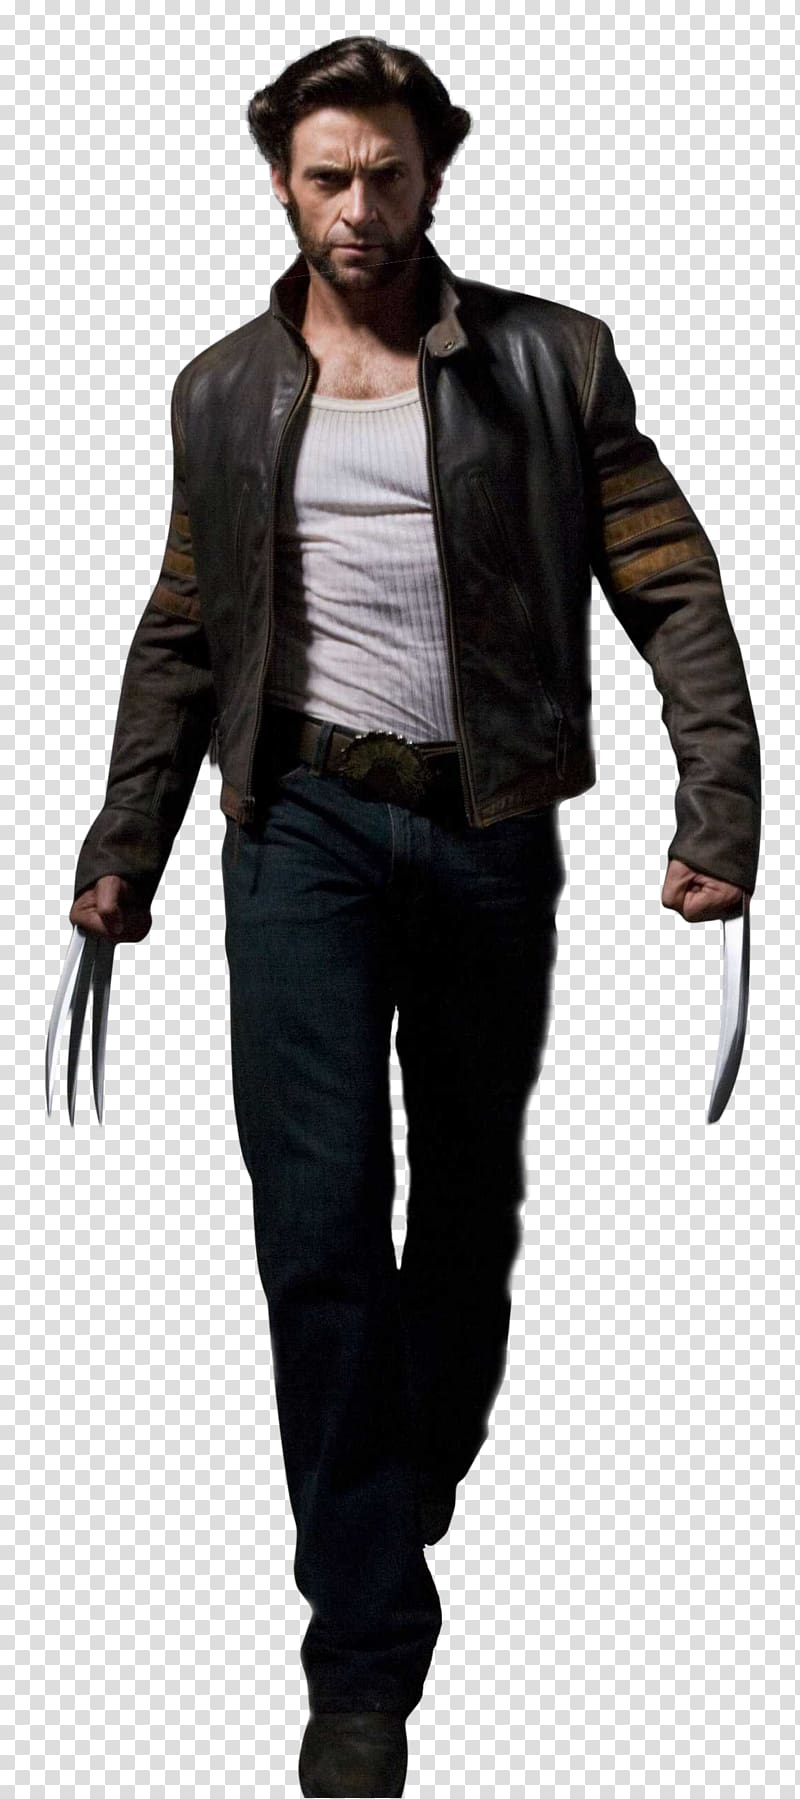 Hugh Jackman The Wolverine Professor X Magneto, Magneto transparent background PNG clipart